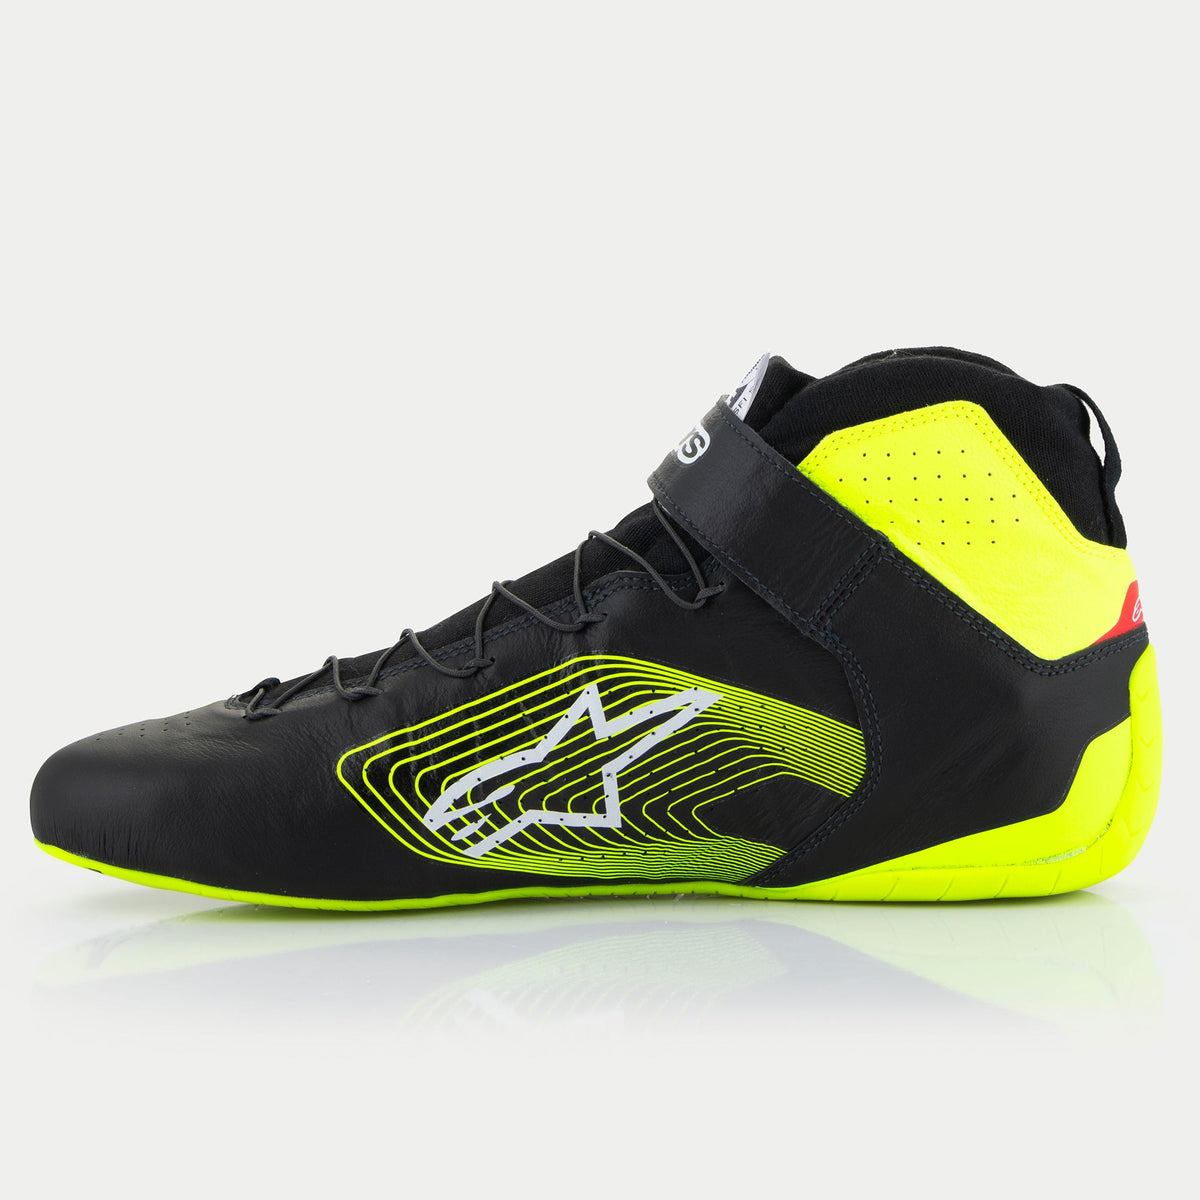 Alpinestars Tech-1 Z V3 Shoes - Black/Yellow Fluo